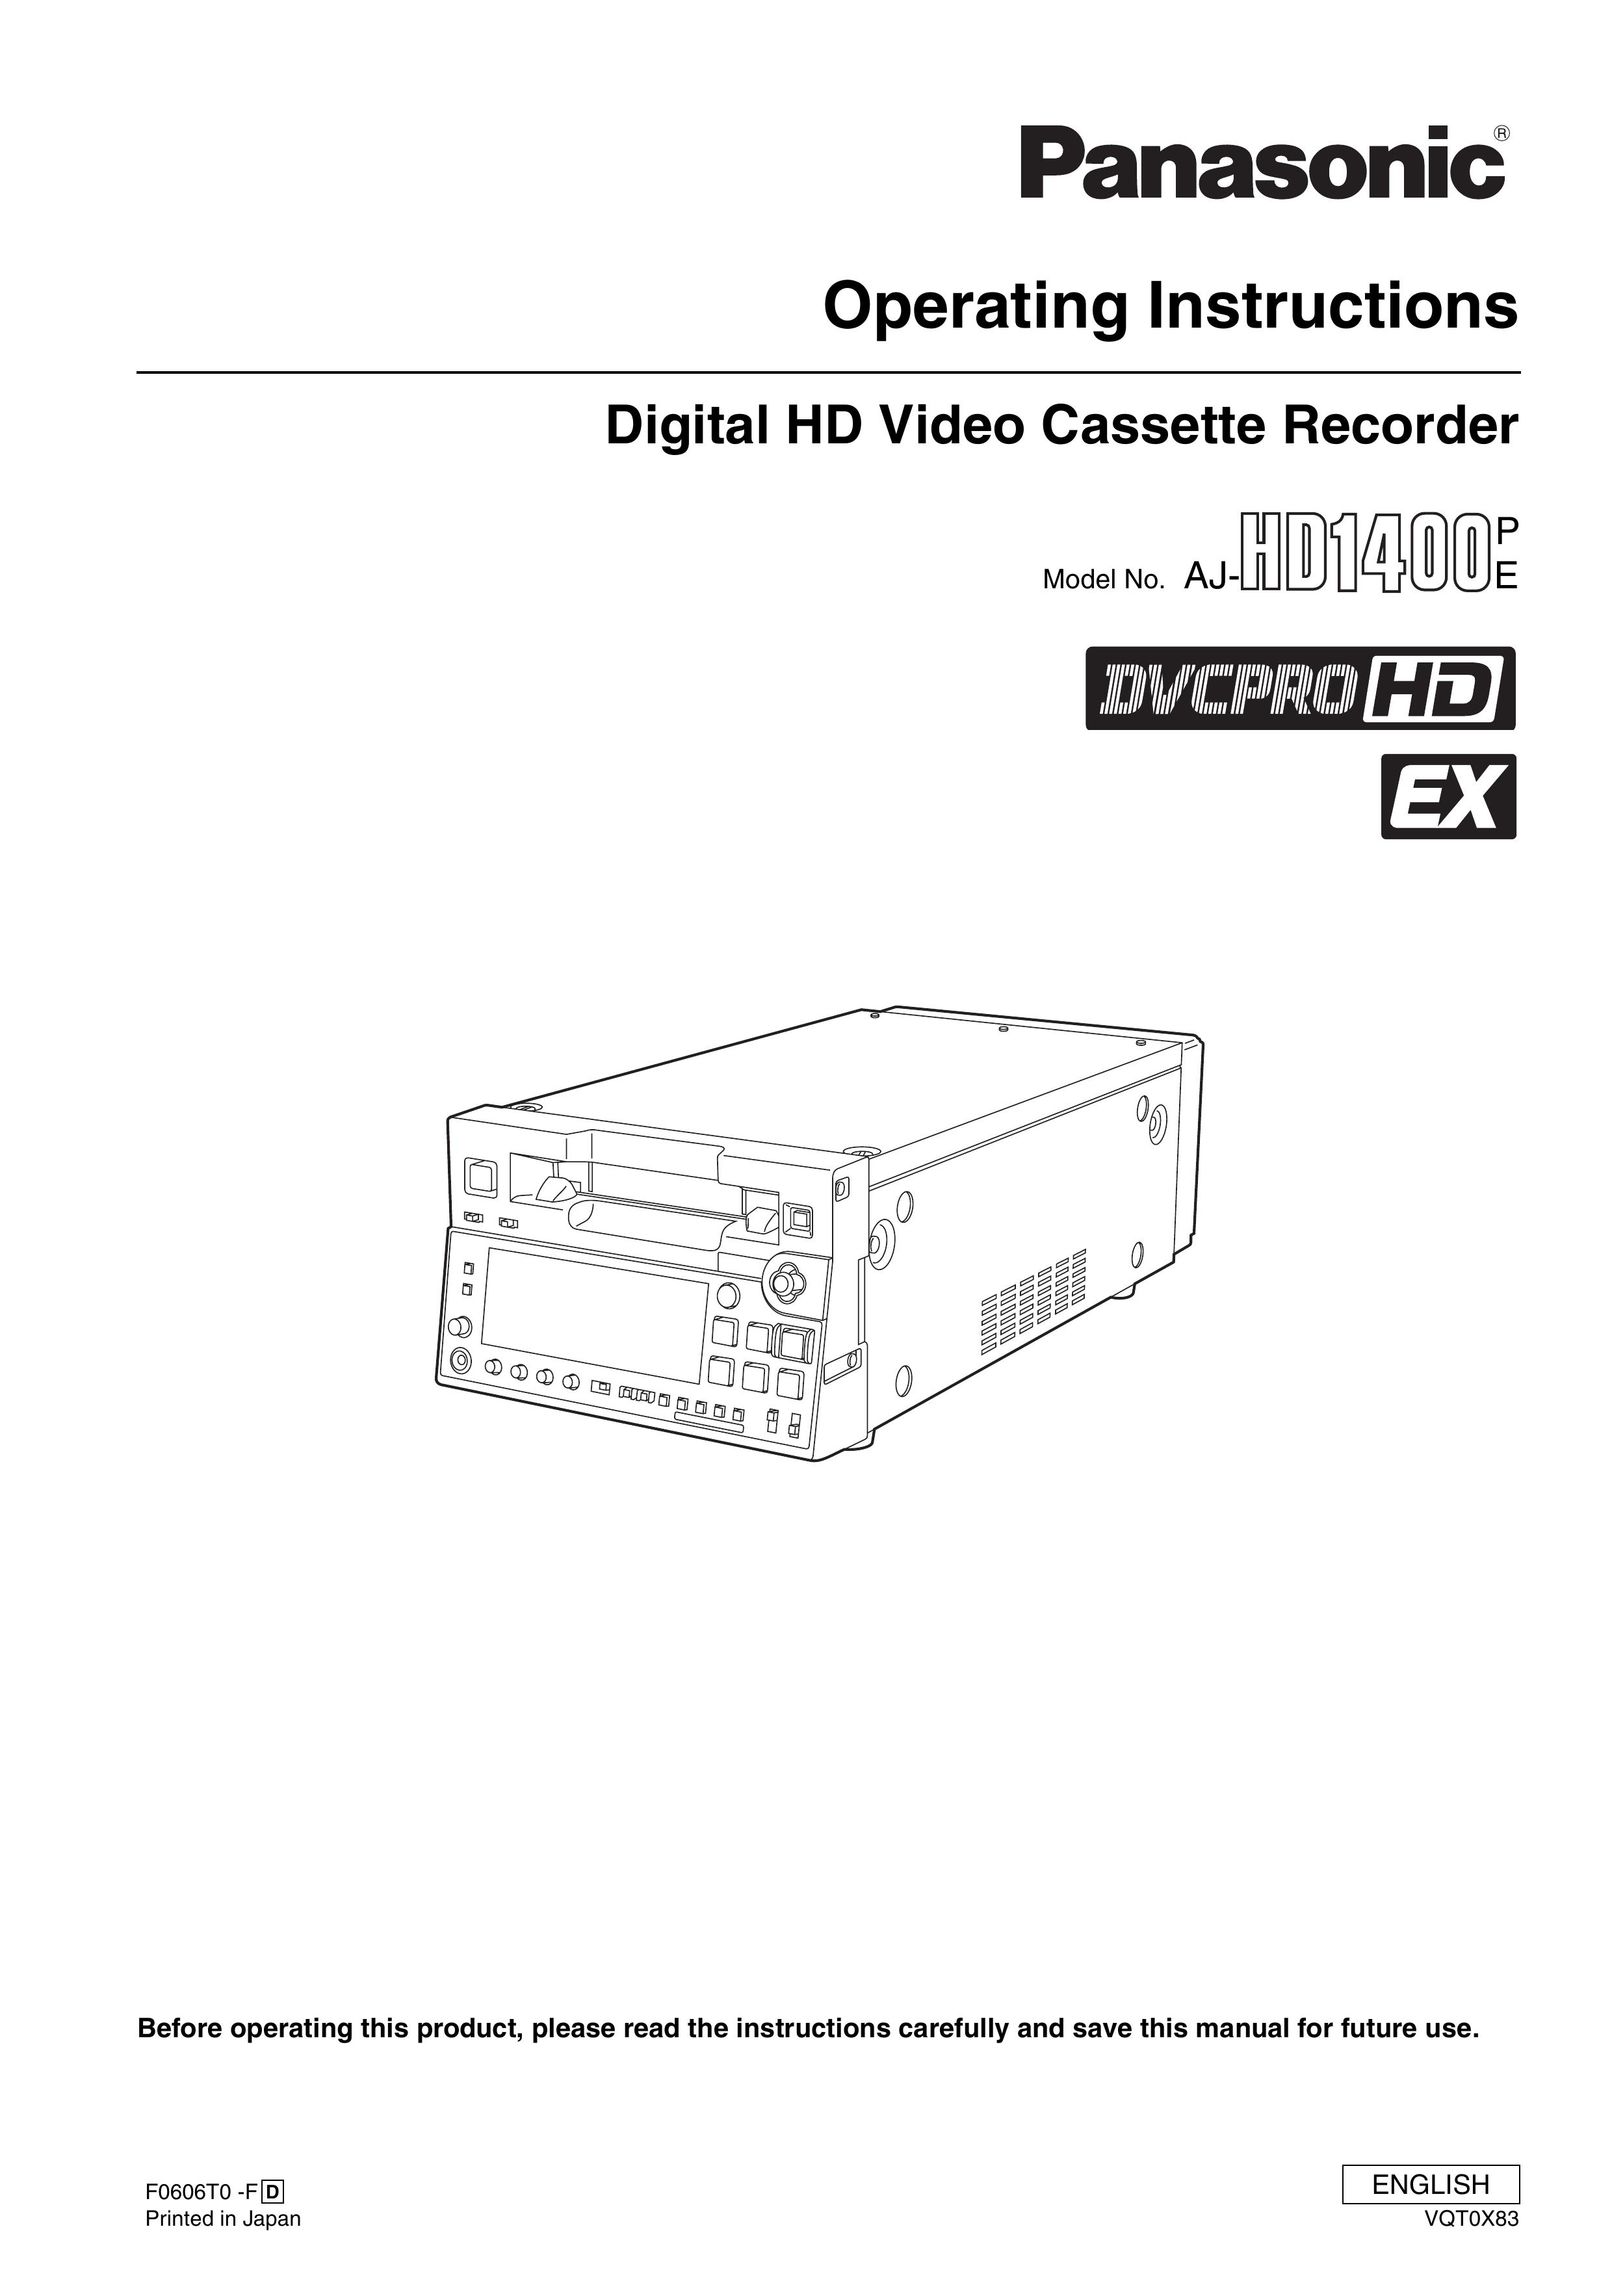 Panasonic AJ-HD1400P VCR User Manual